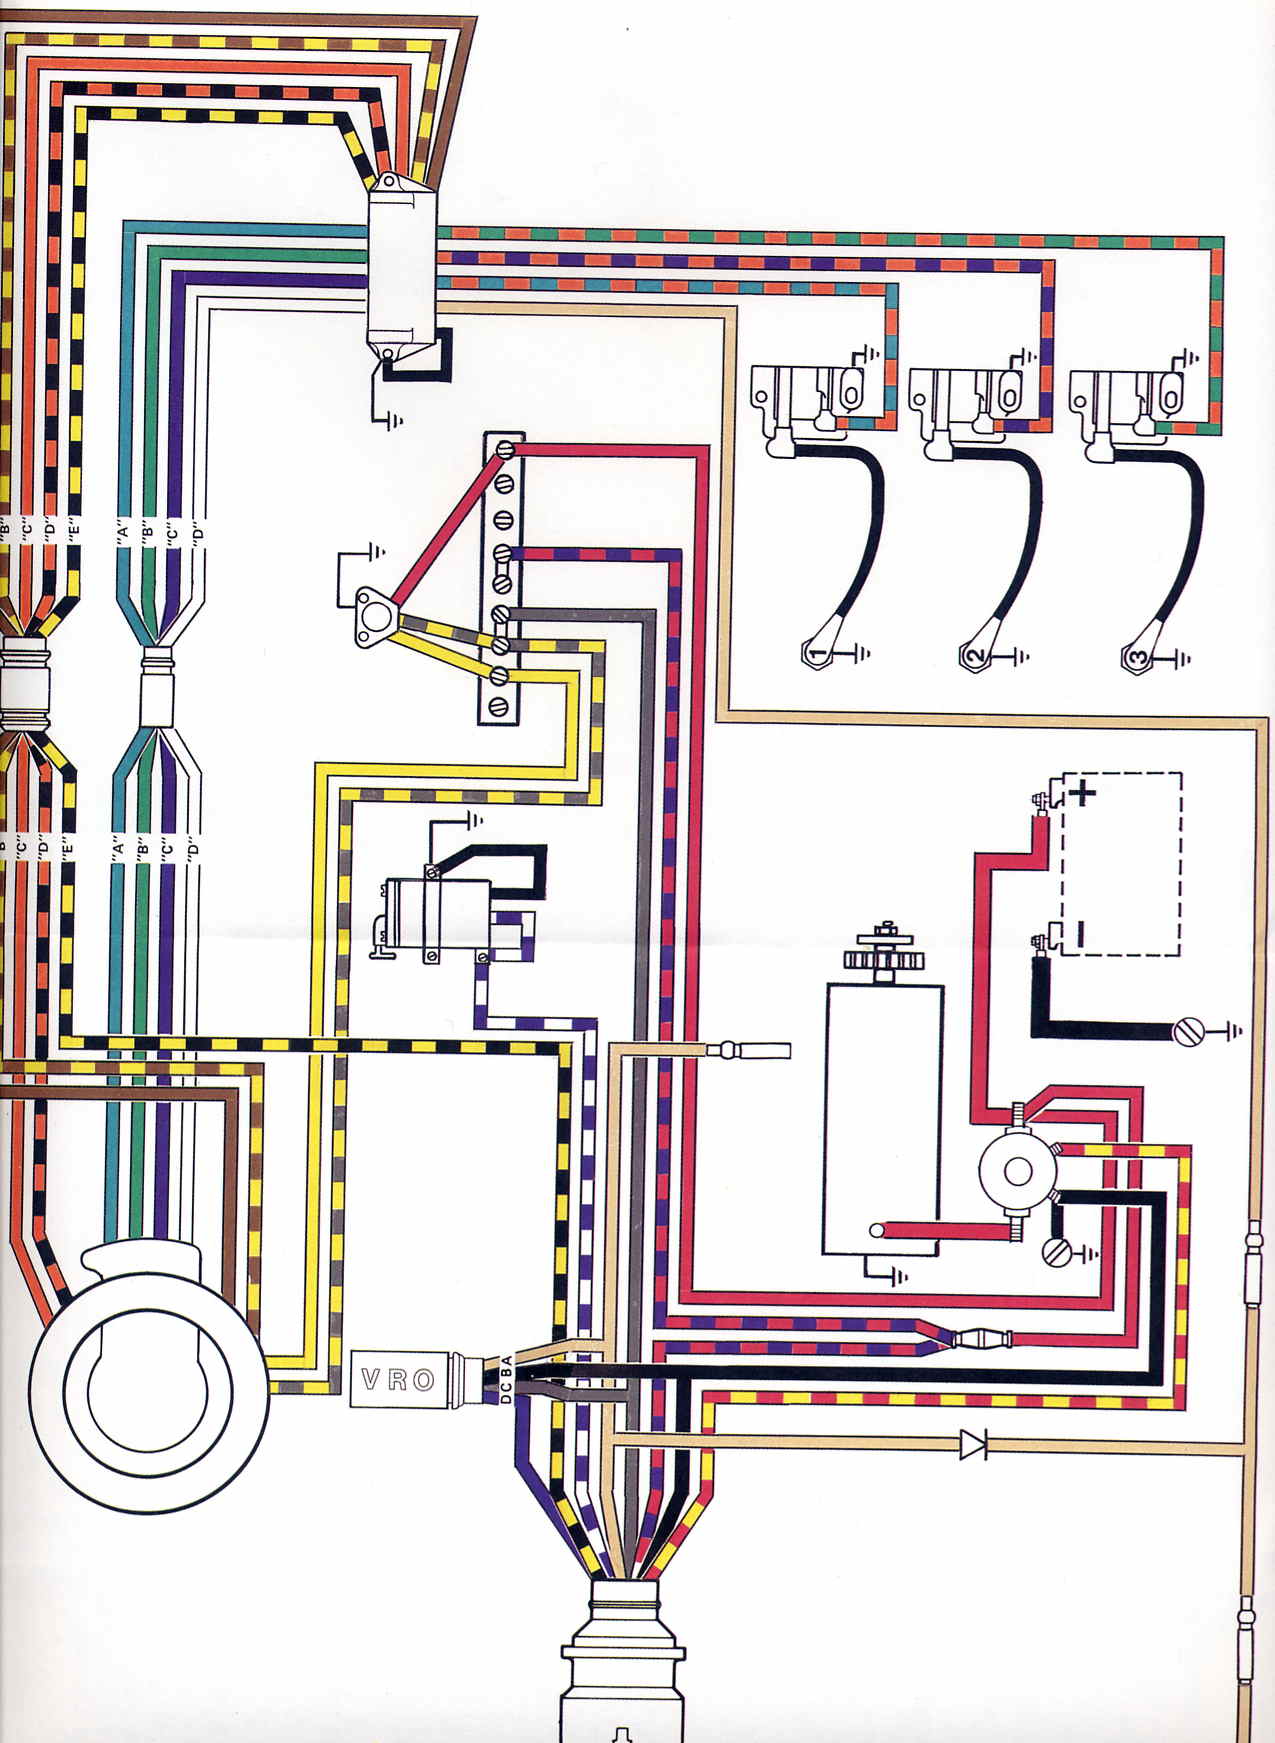 sl51351 wiring diagram